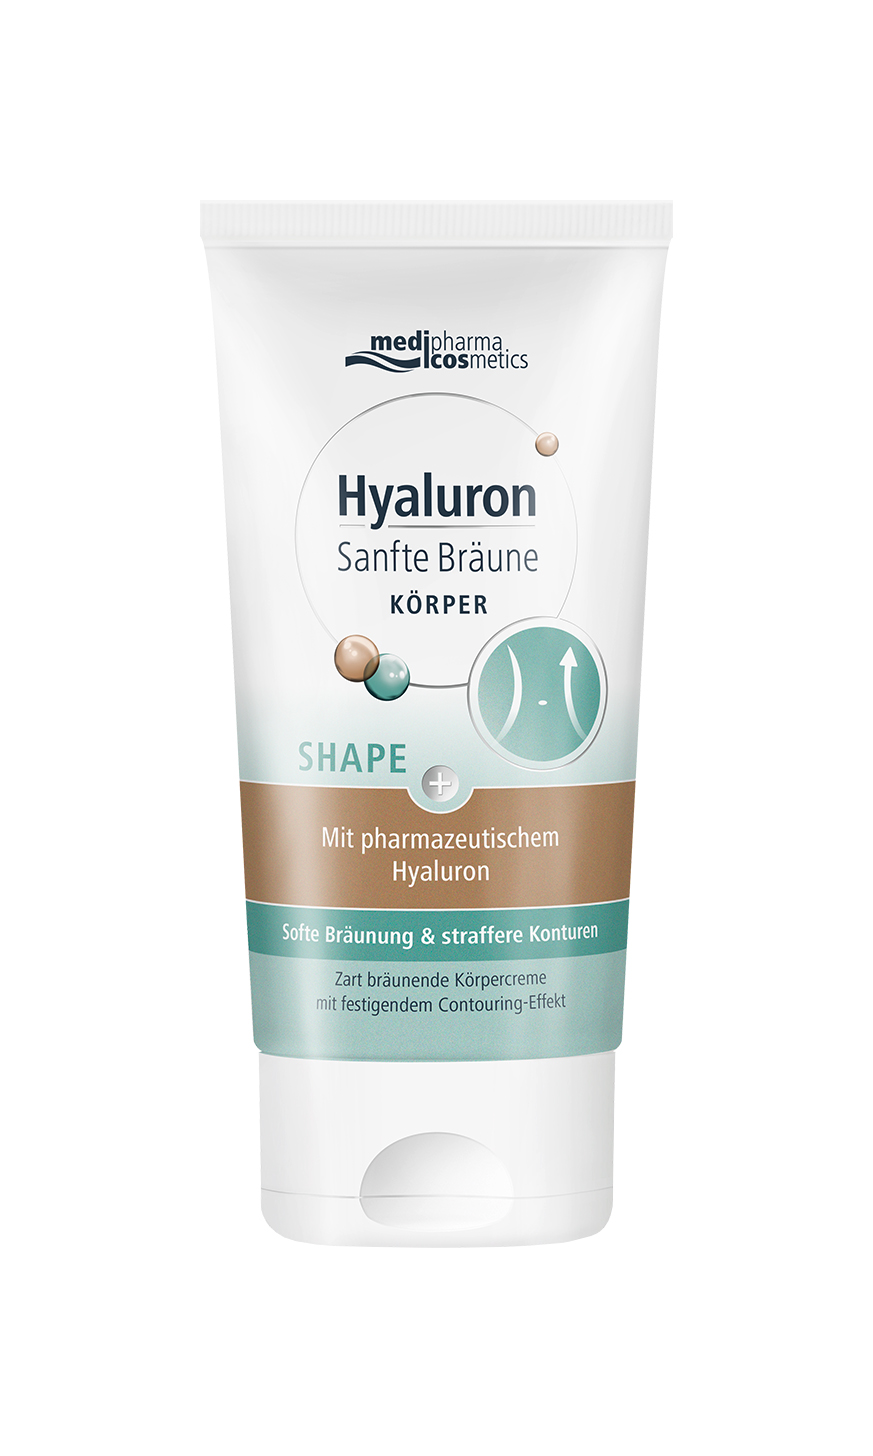 medipharma cosmetics Hyaluron Sanfte Bräune Körper SHAPE